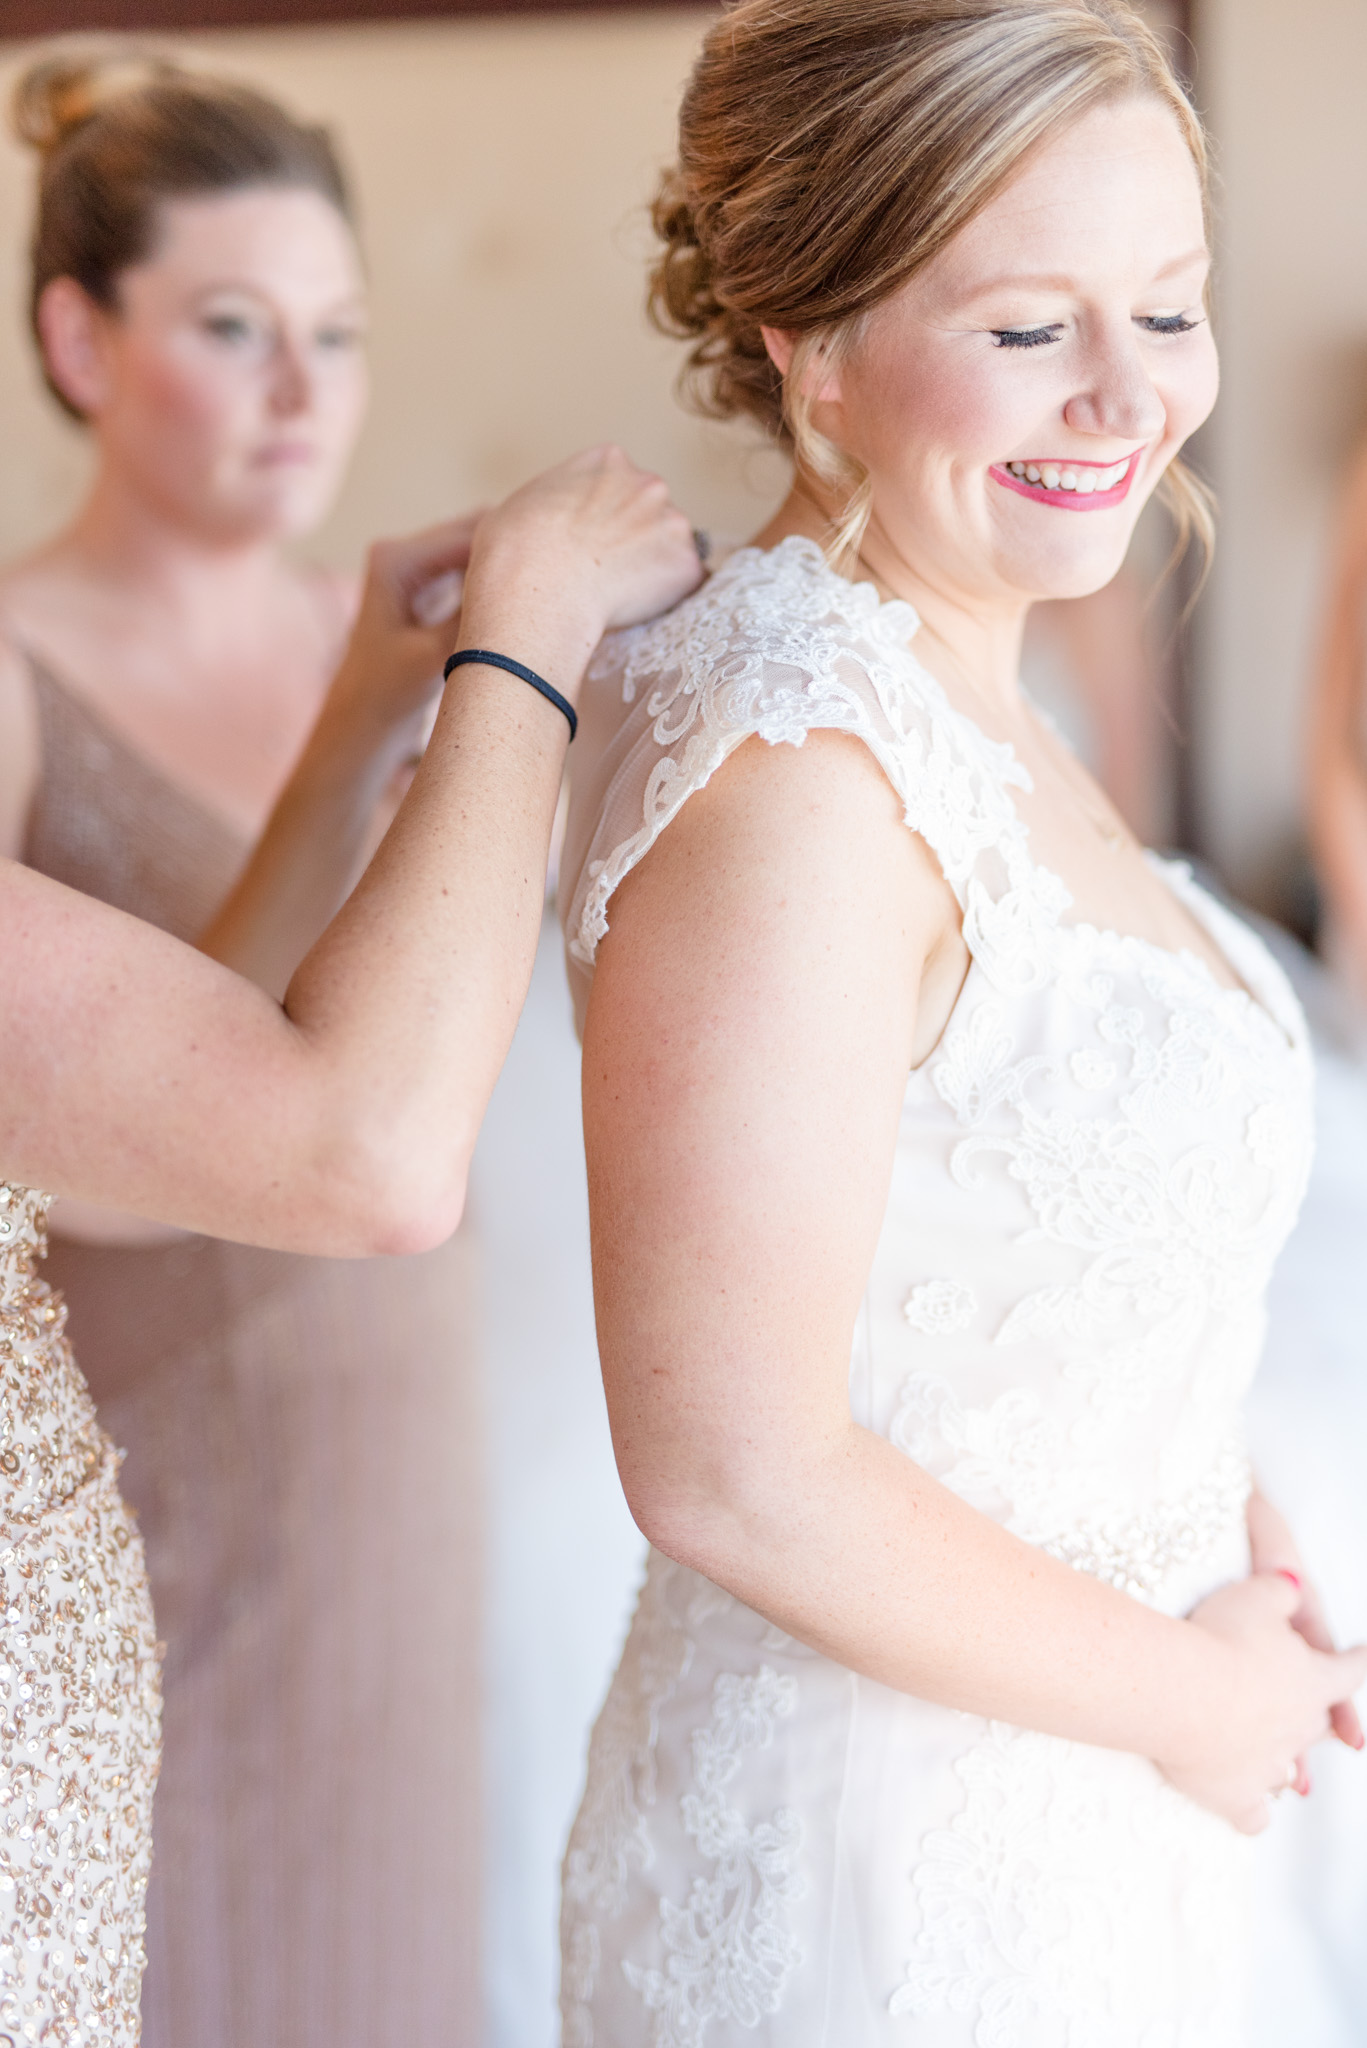 Bridesmaids help bride button dress.